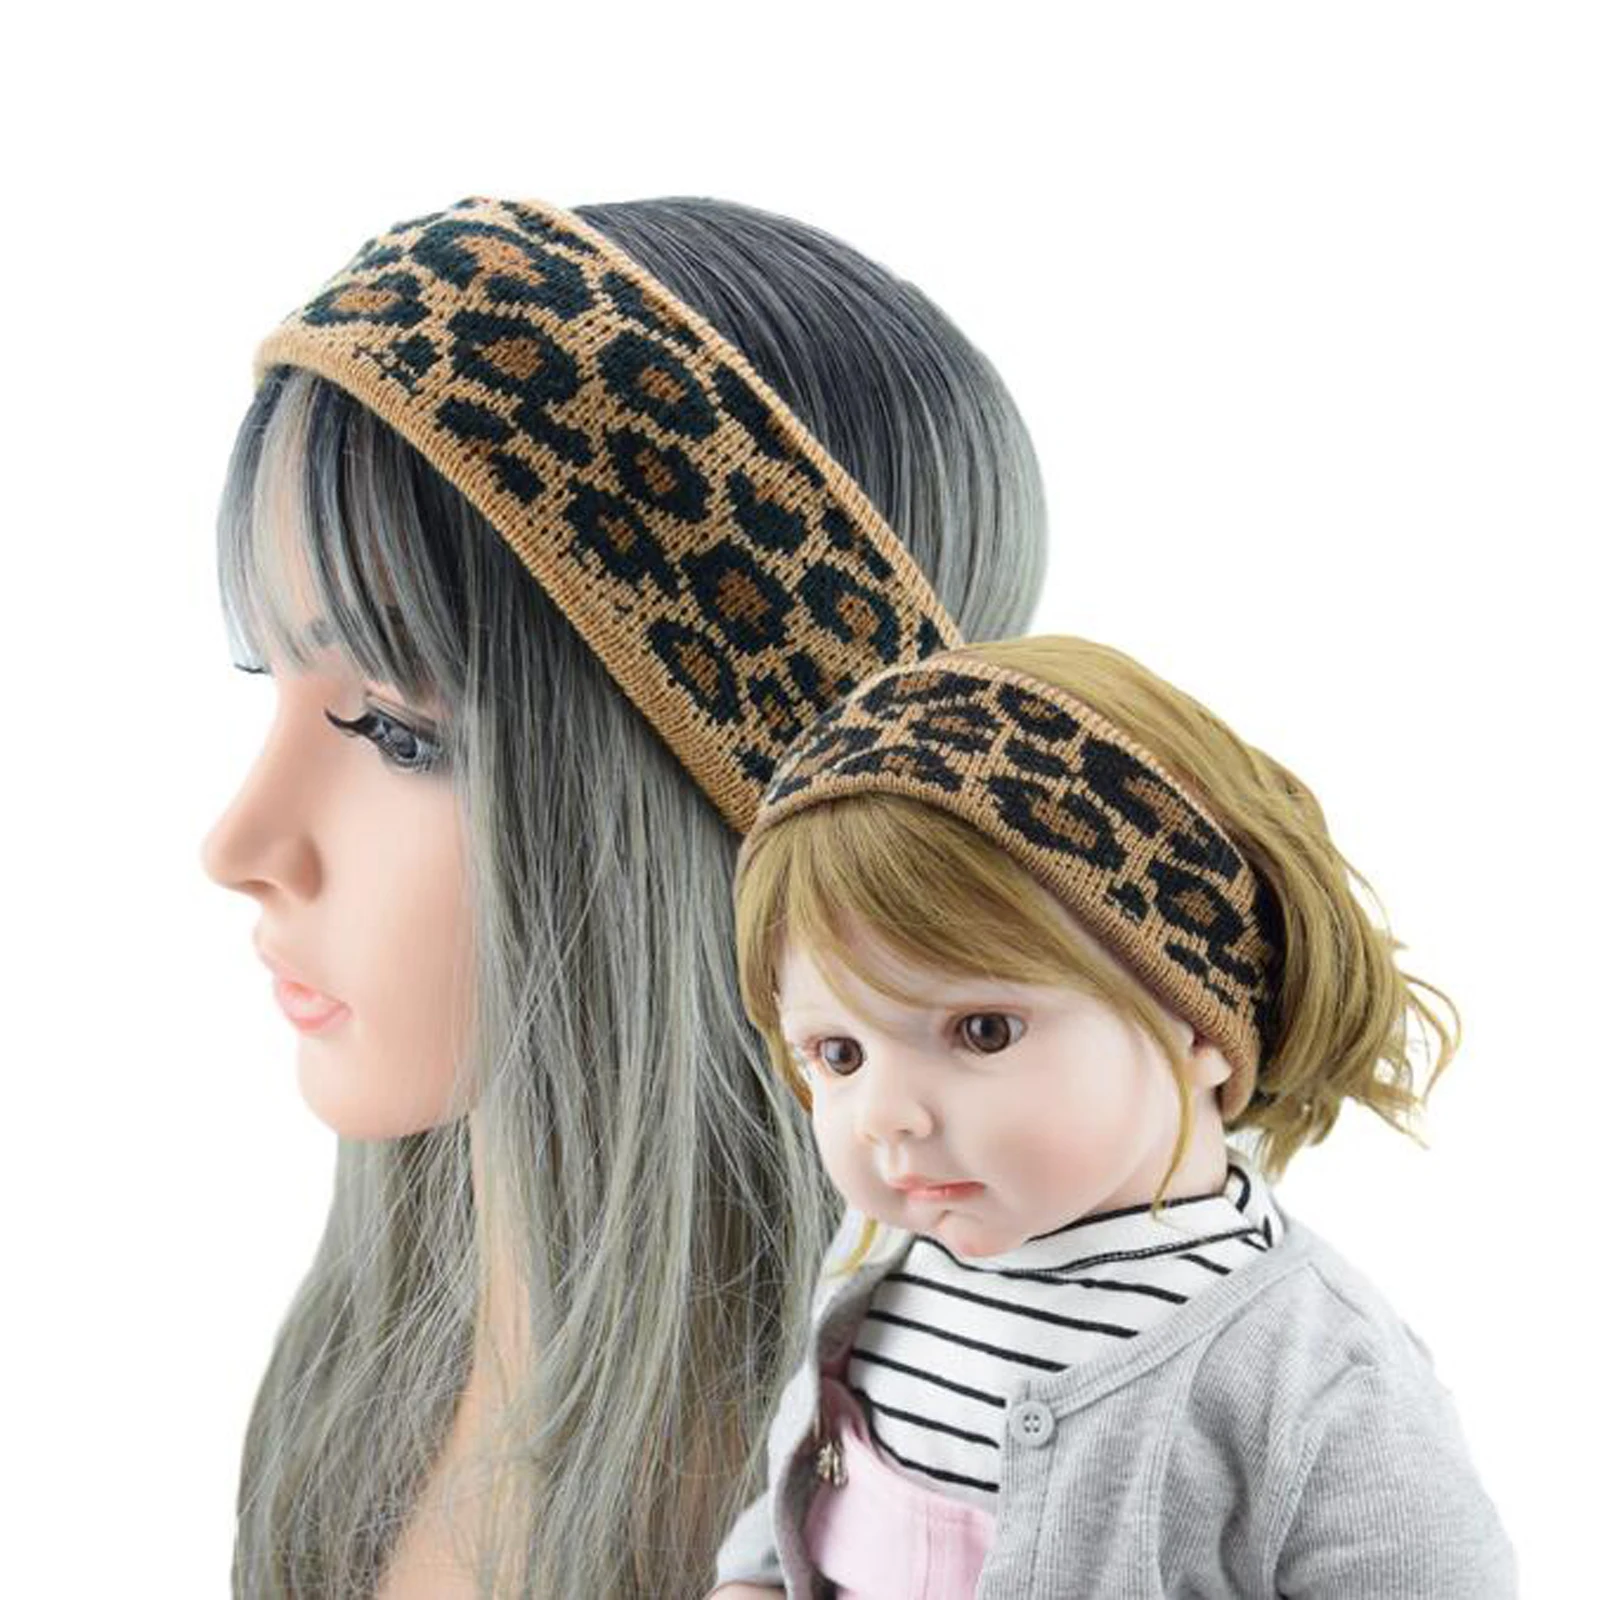 PROLY חדש אופנה נשים ילדים בגימור להגדיר חם רך נמר שיער הלהקה הכובעים החורף קרוס קשר טורבן אביזרים לשיער